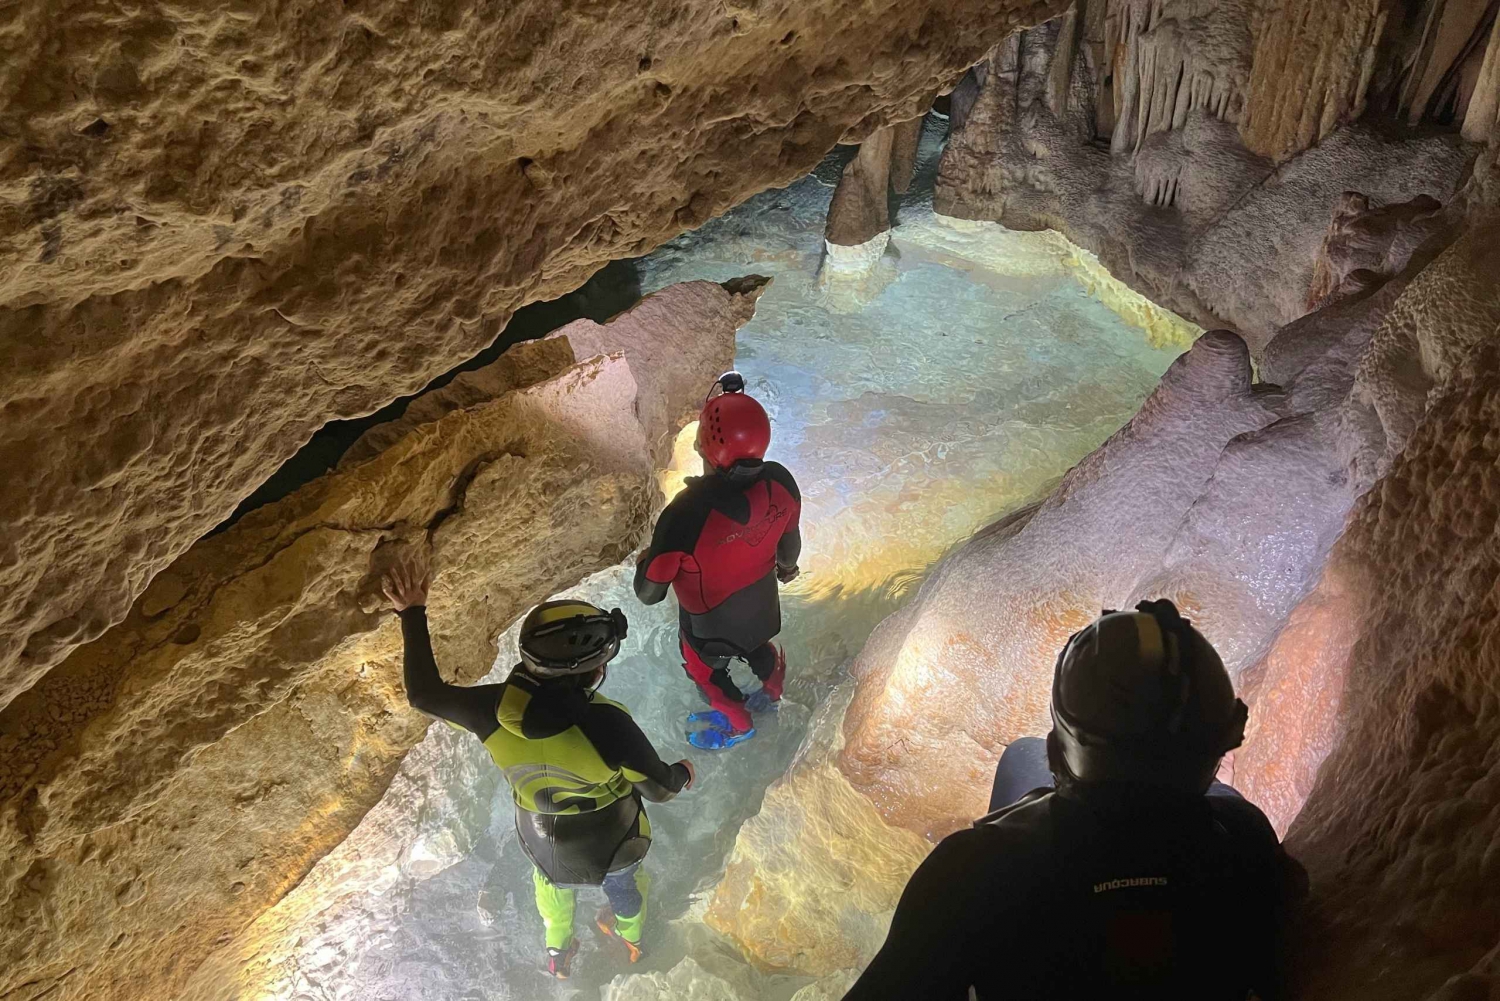 Mallorca: Aquatic Cave Exploration Guided Tour